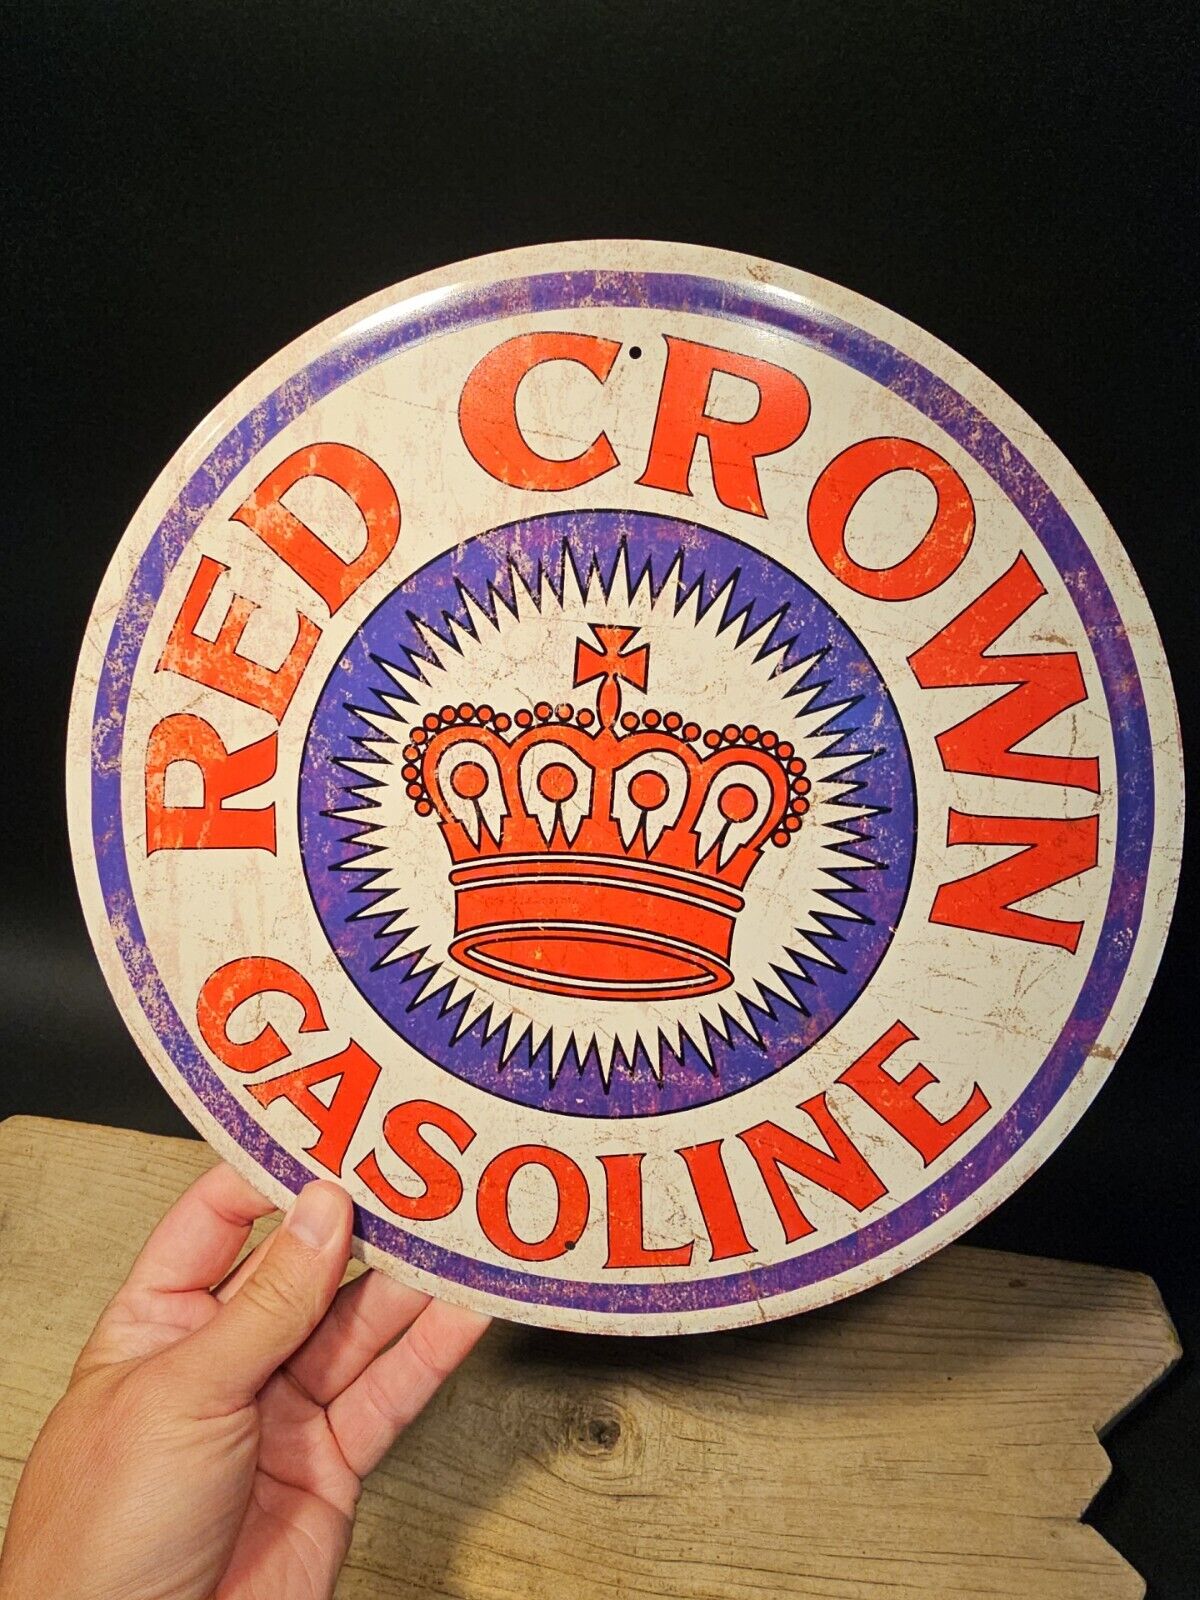 12" Antique Vintage Style Round Metal Gasoline Sign Plaque